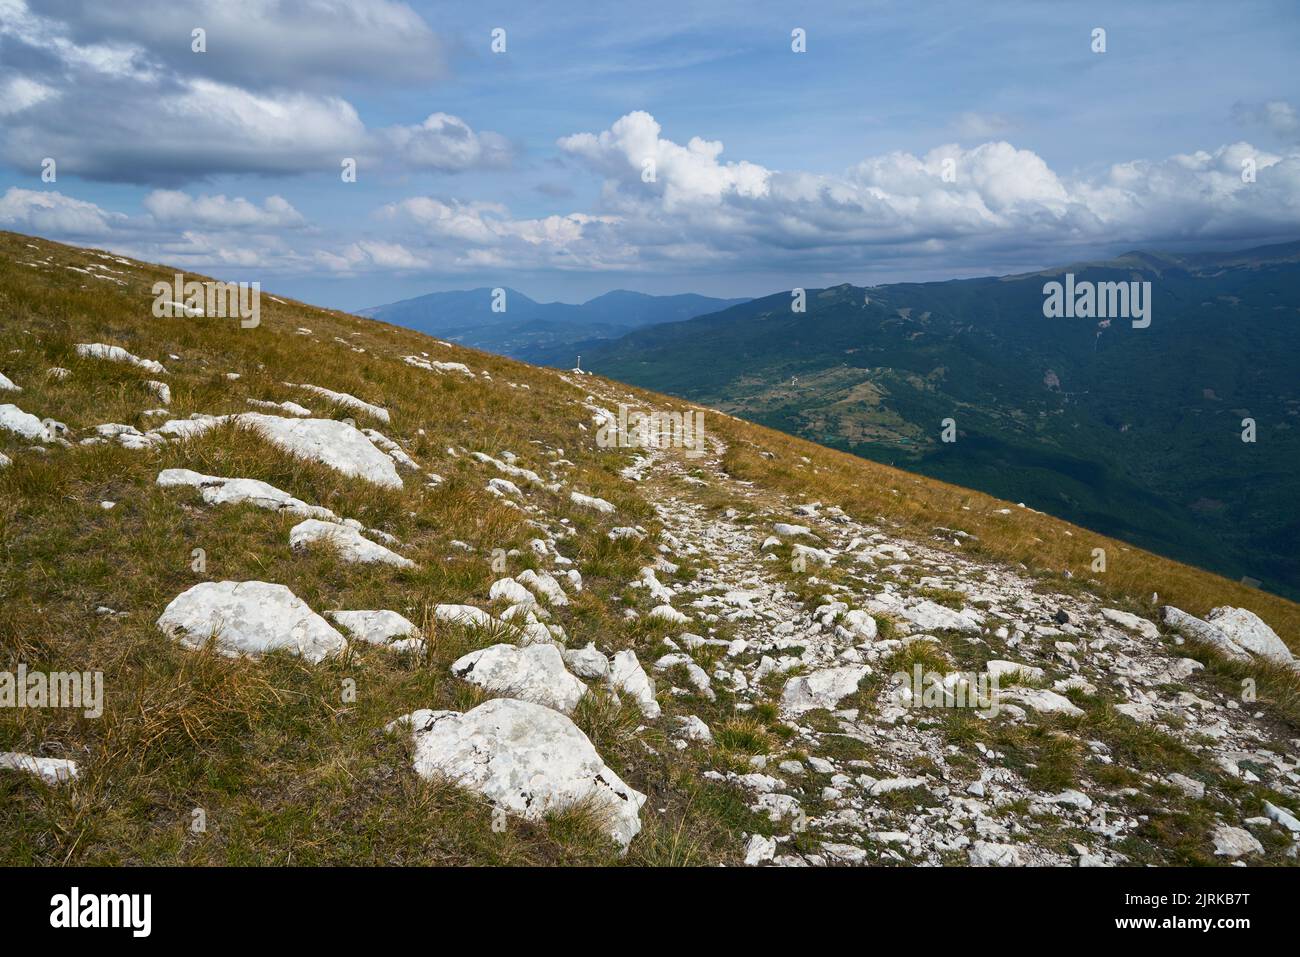 Walking path at Monti Sibillini national park, Italy Stock Photo